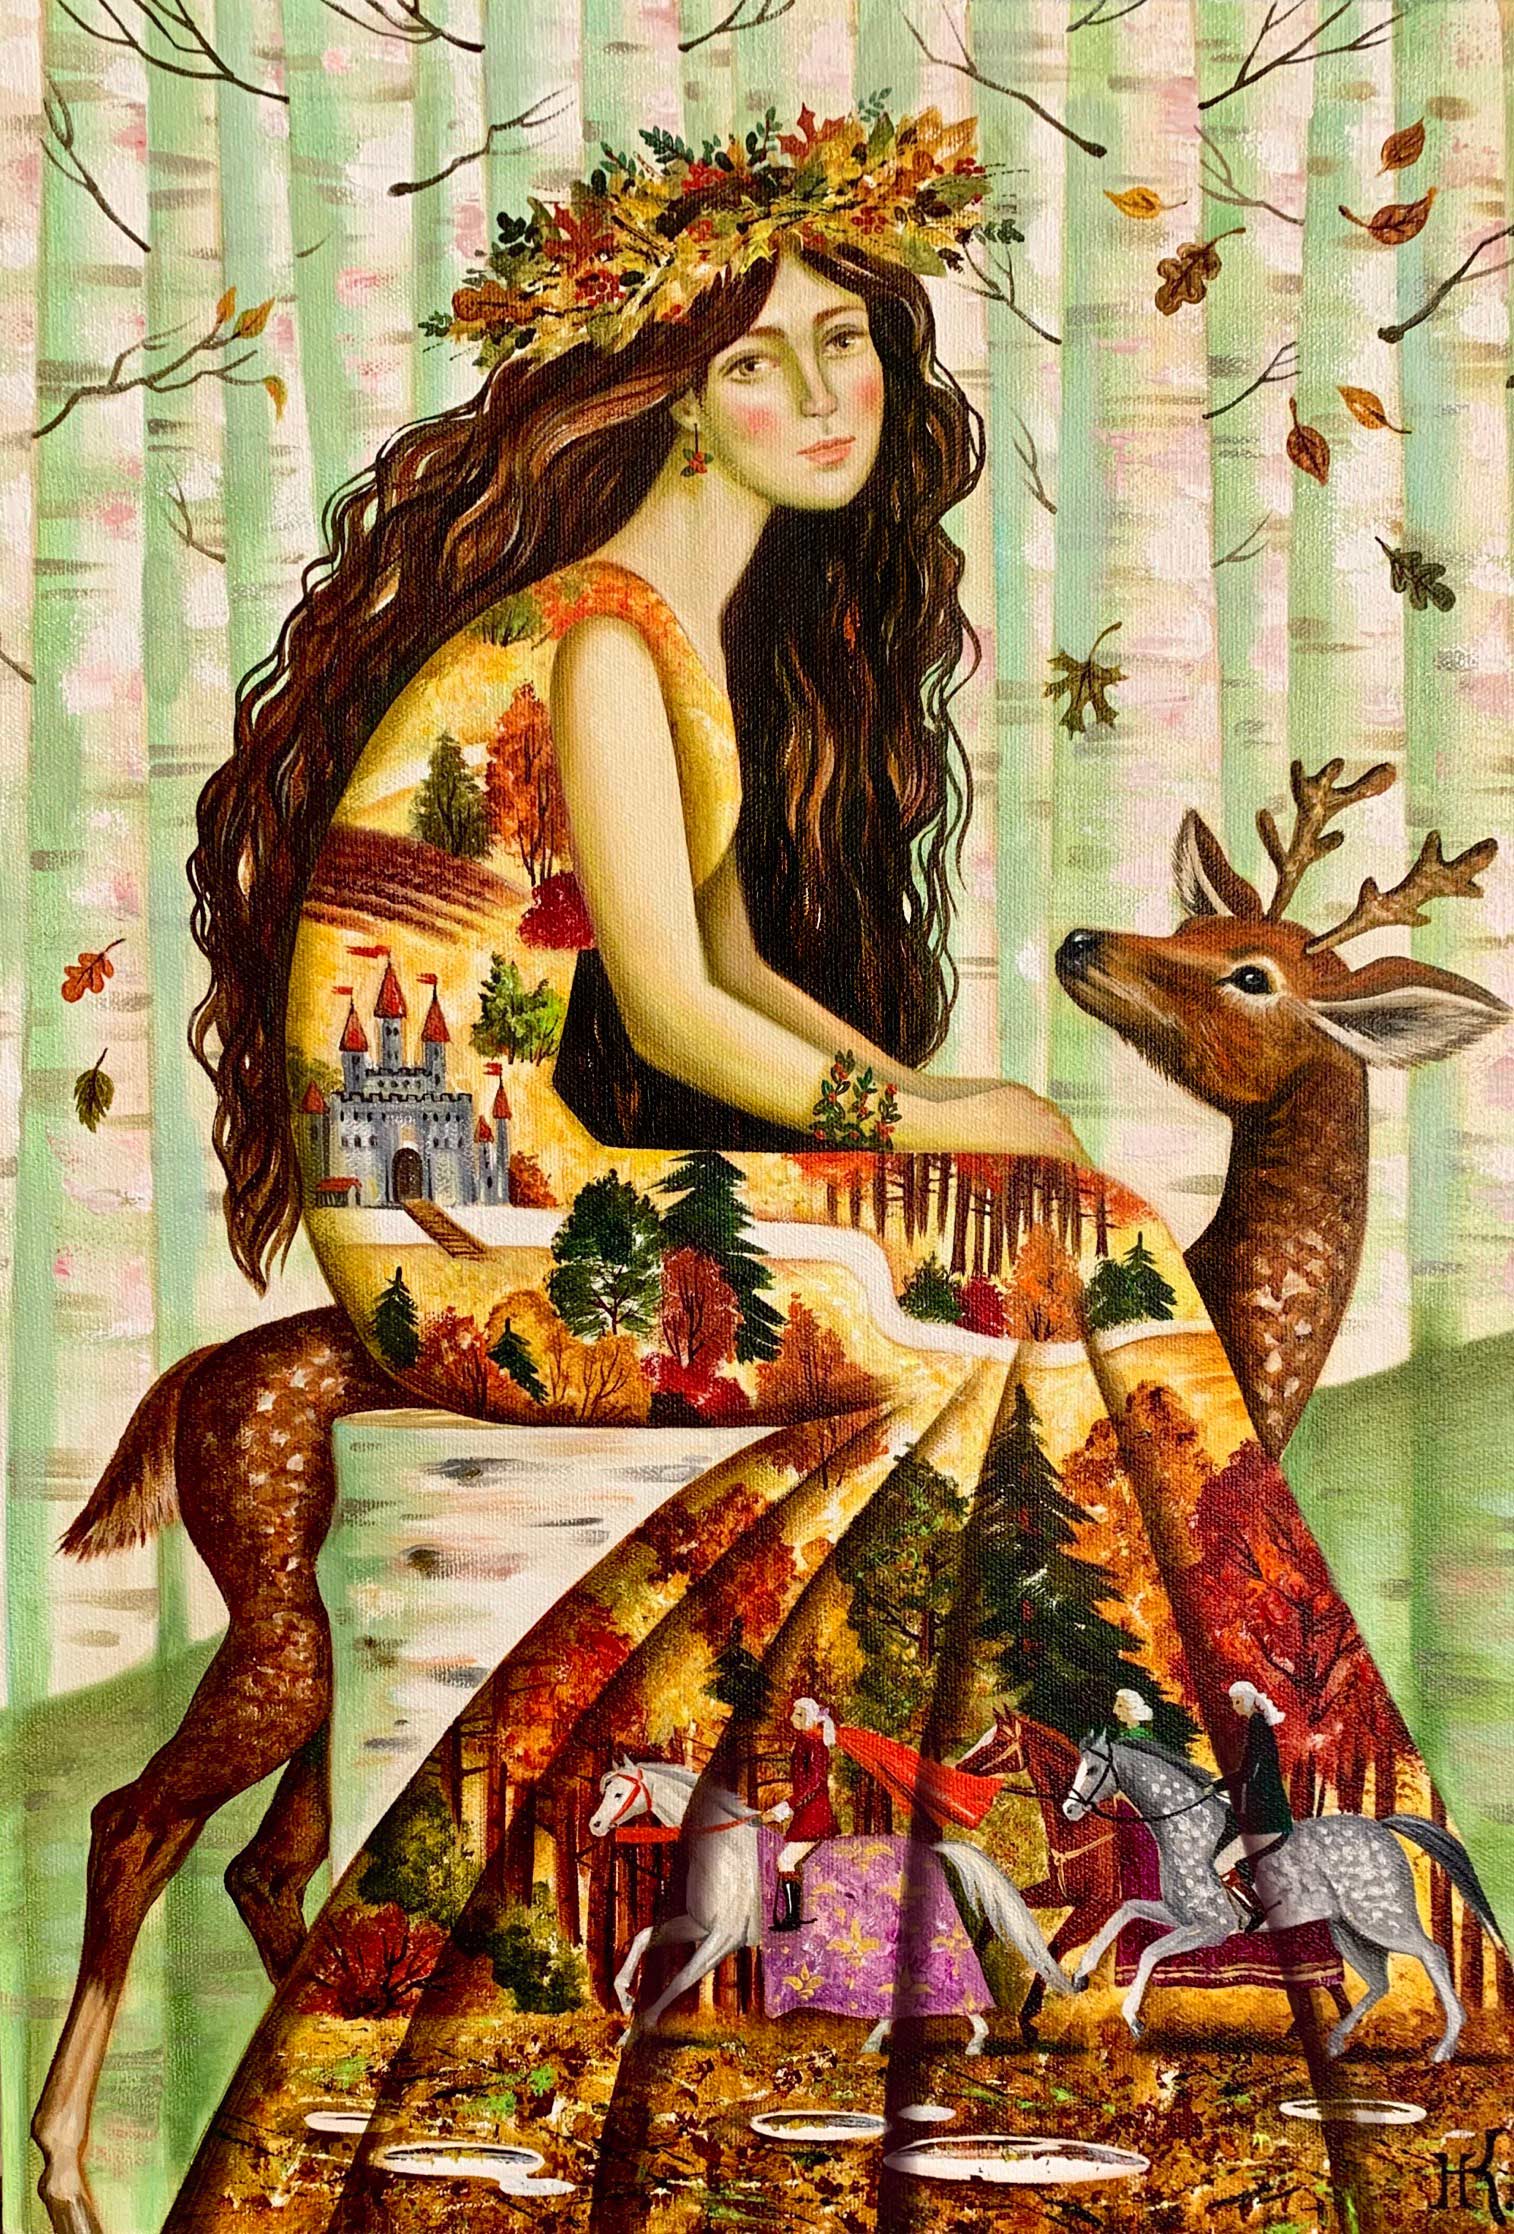 Forest Soul - 1, Natalya Klimova, Buy the painting Oil